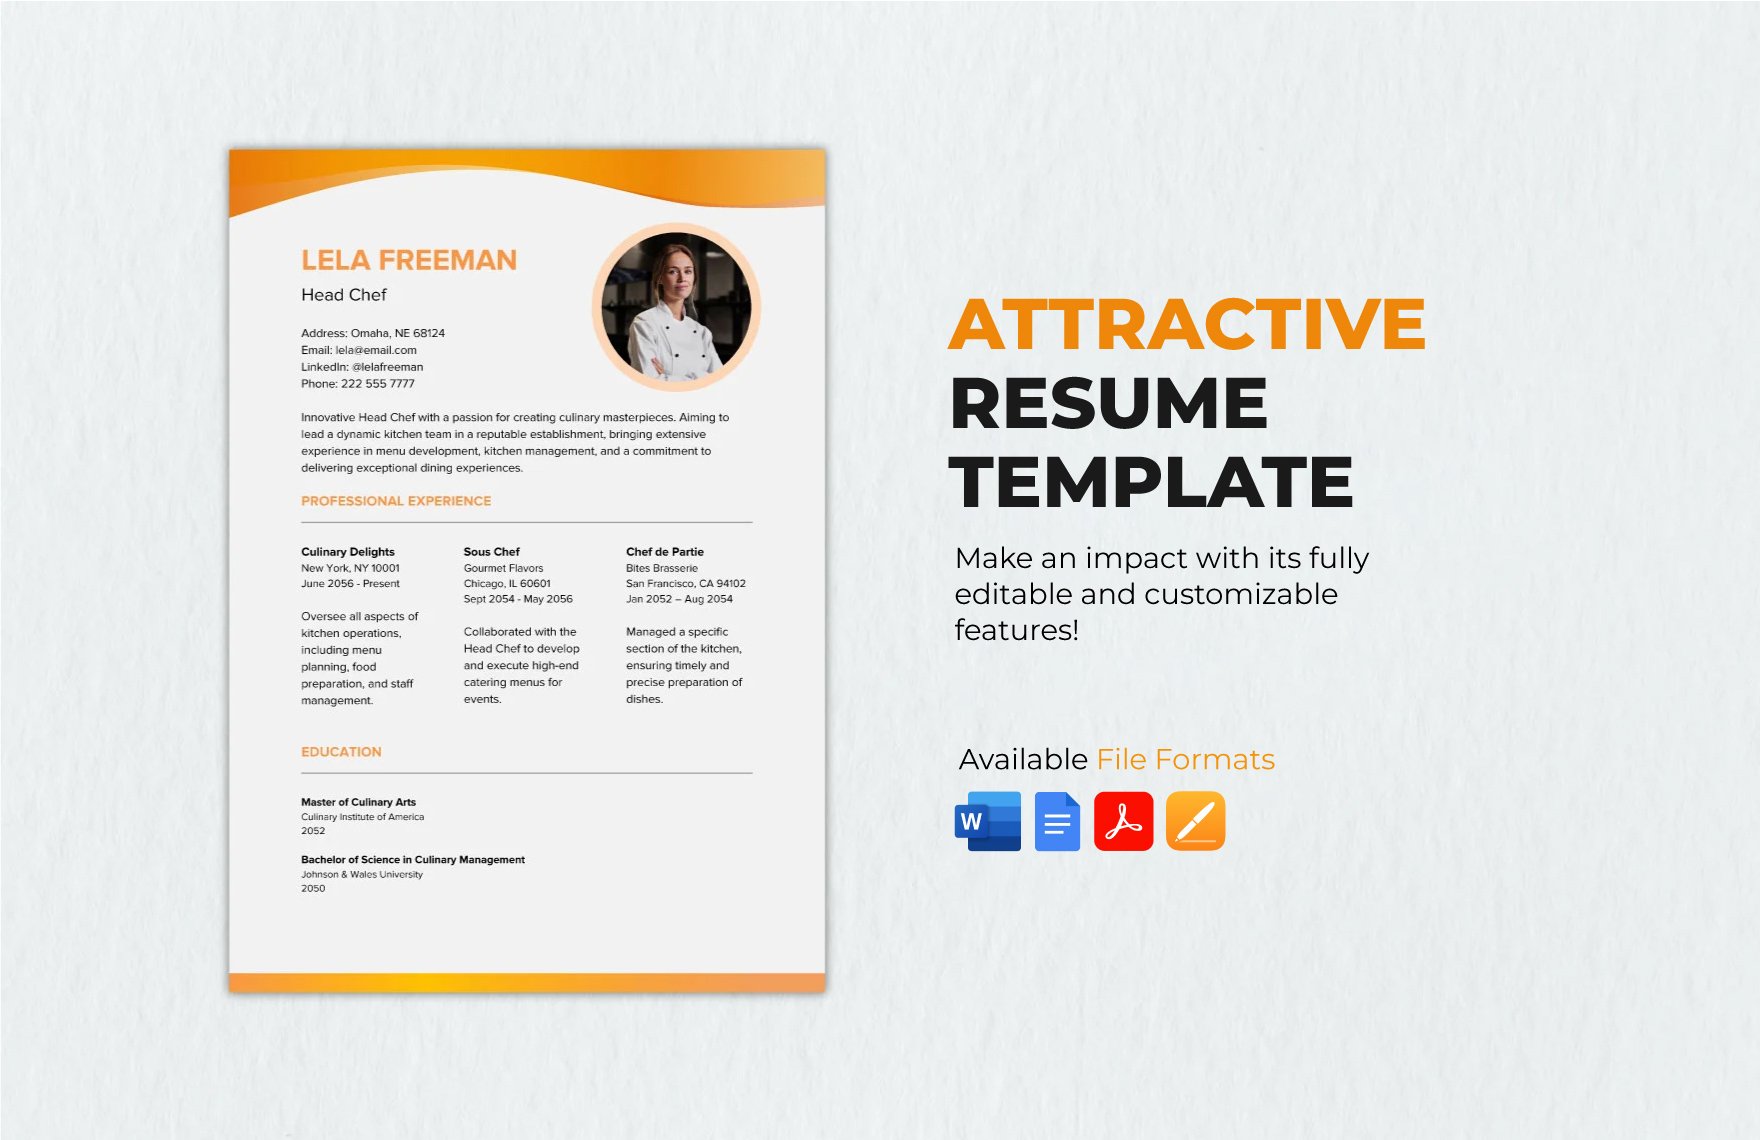 Attractive Resume Template